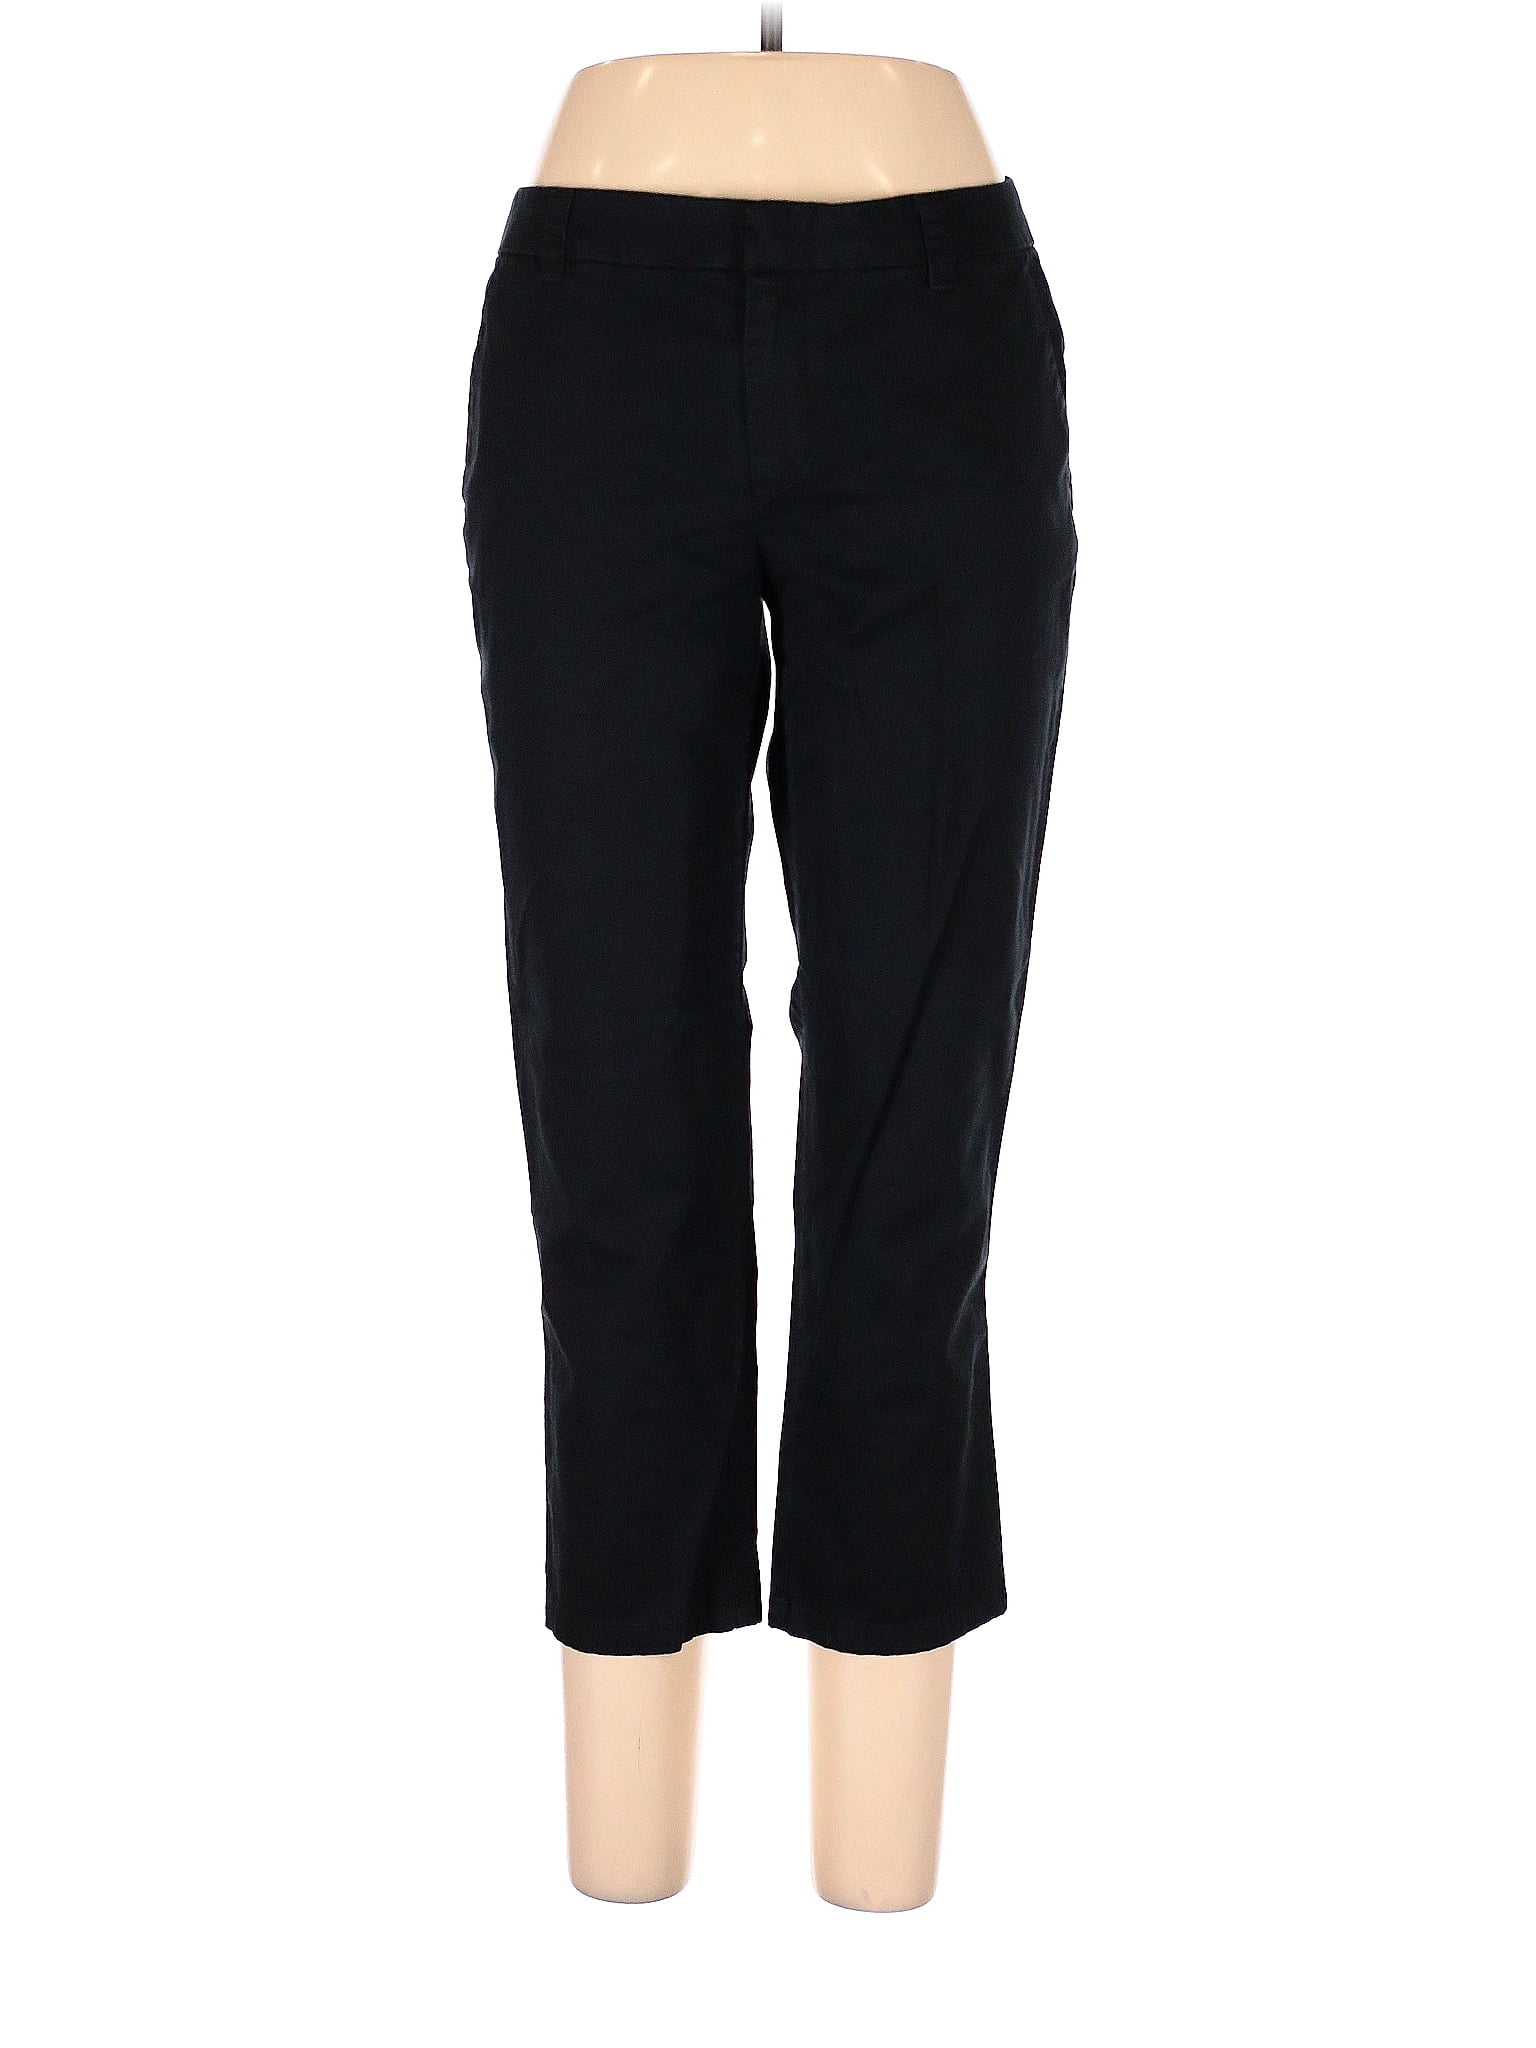 JCPenney Black Dress Pants Size 12 - 53% off | thredUP